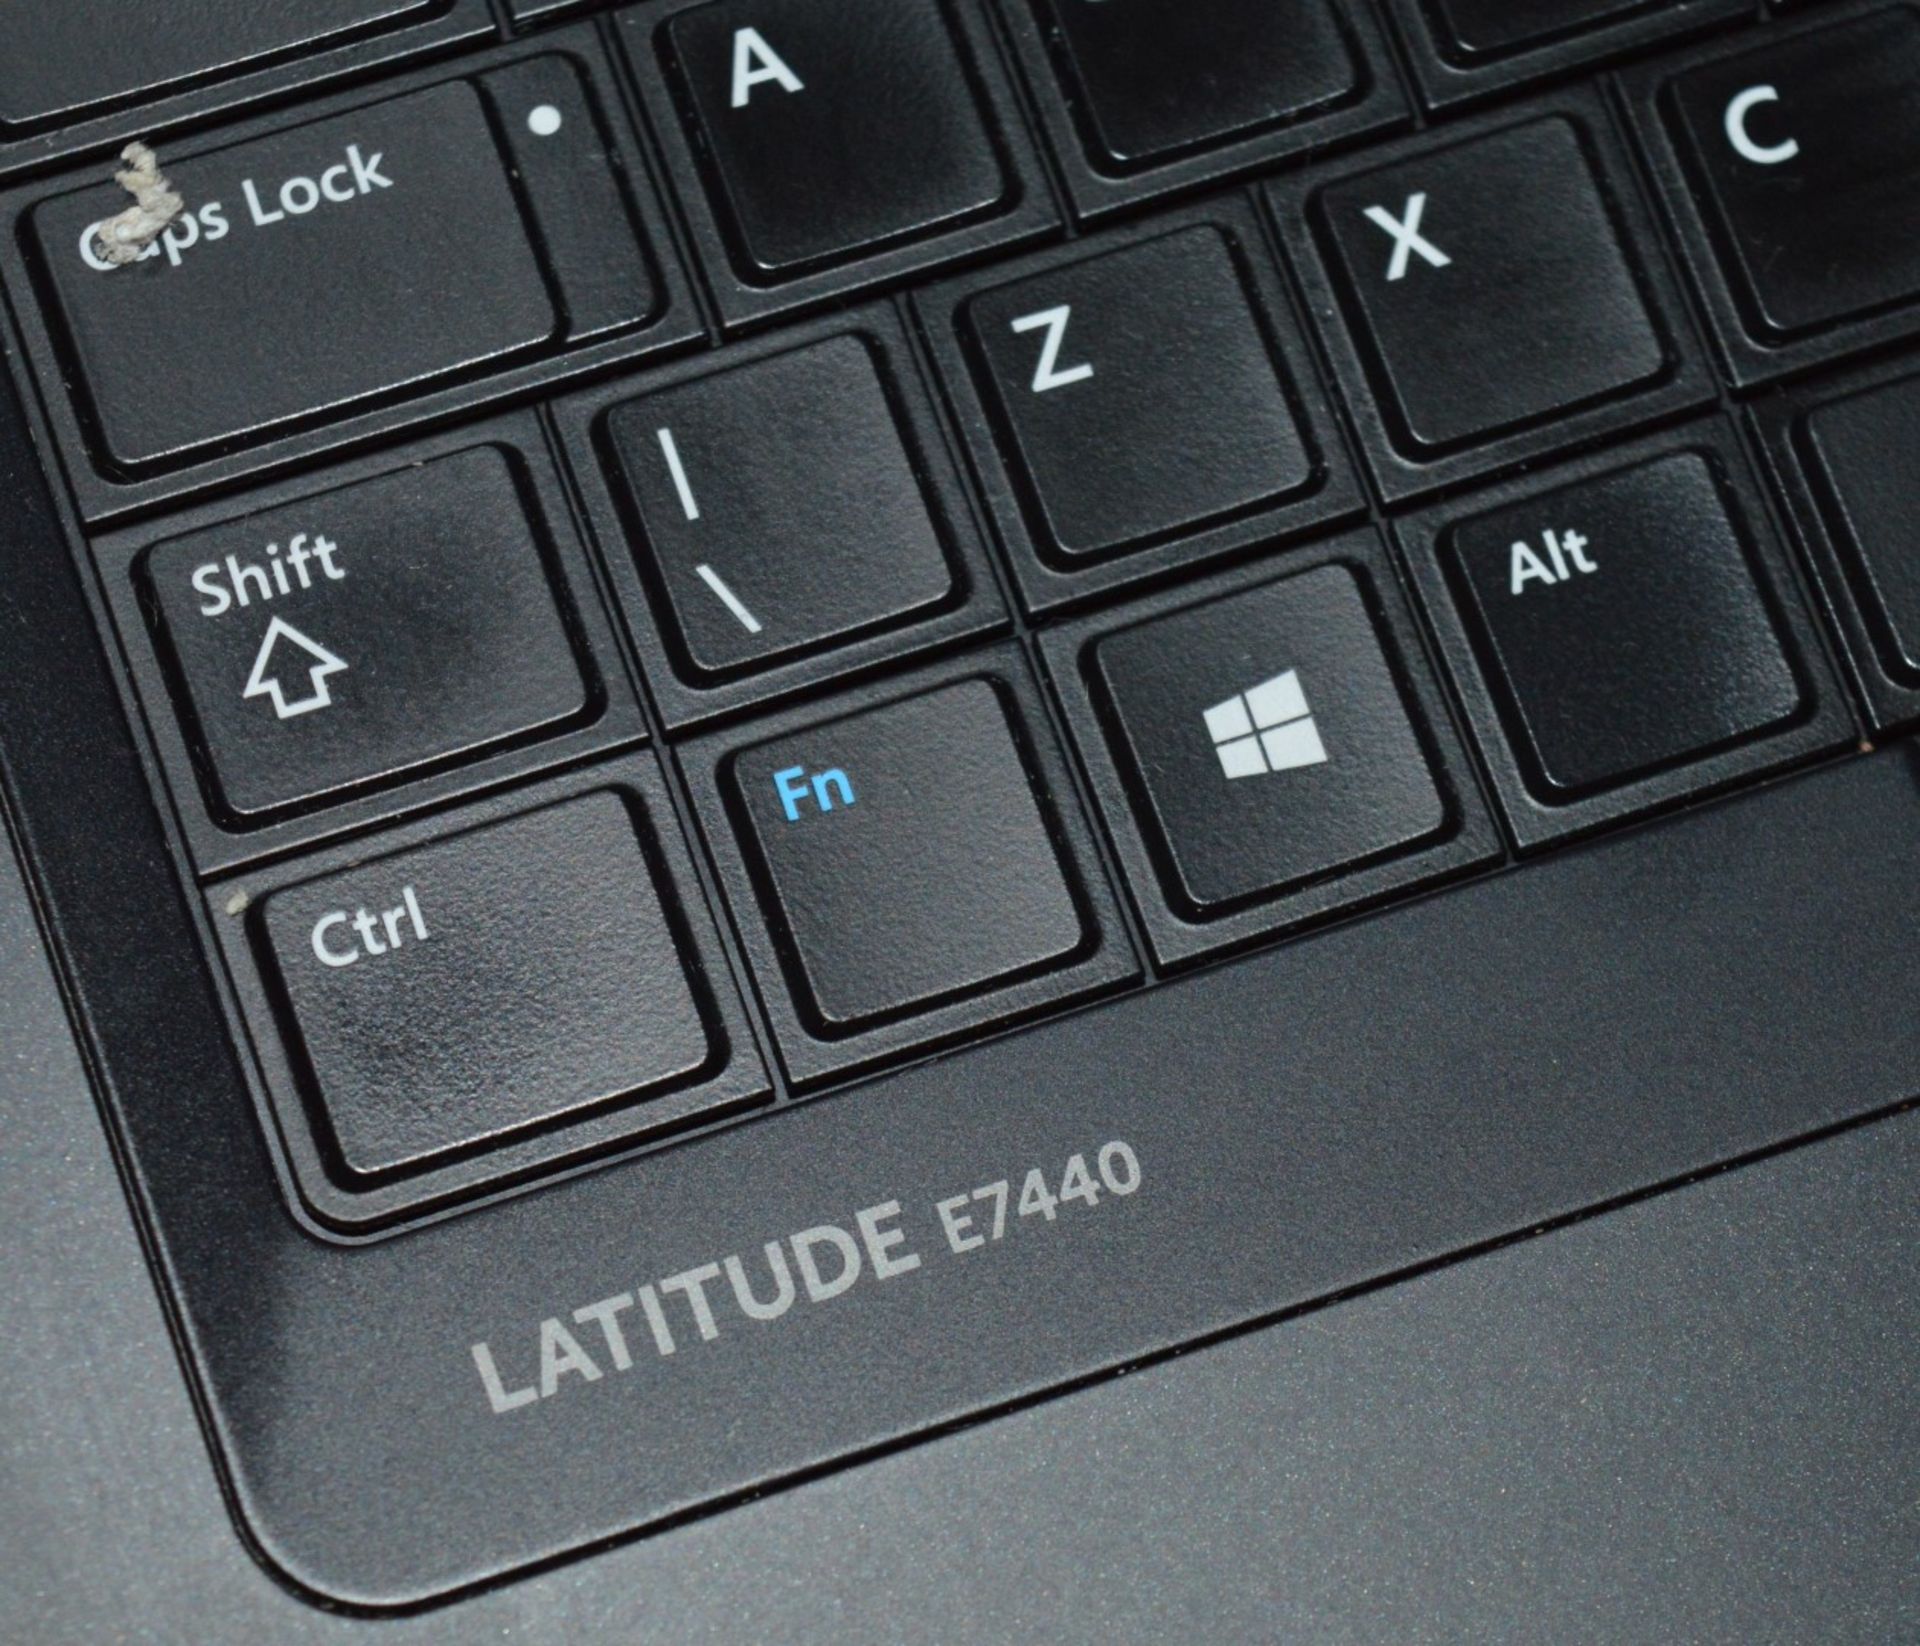 1 x Dell Latitude E7440 Laptop Computer - 14 Inch Screen - Features Intel Core i5-4310U 2.6ghz - Image 10 of 10